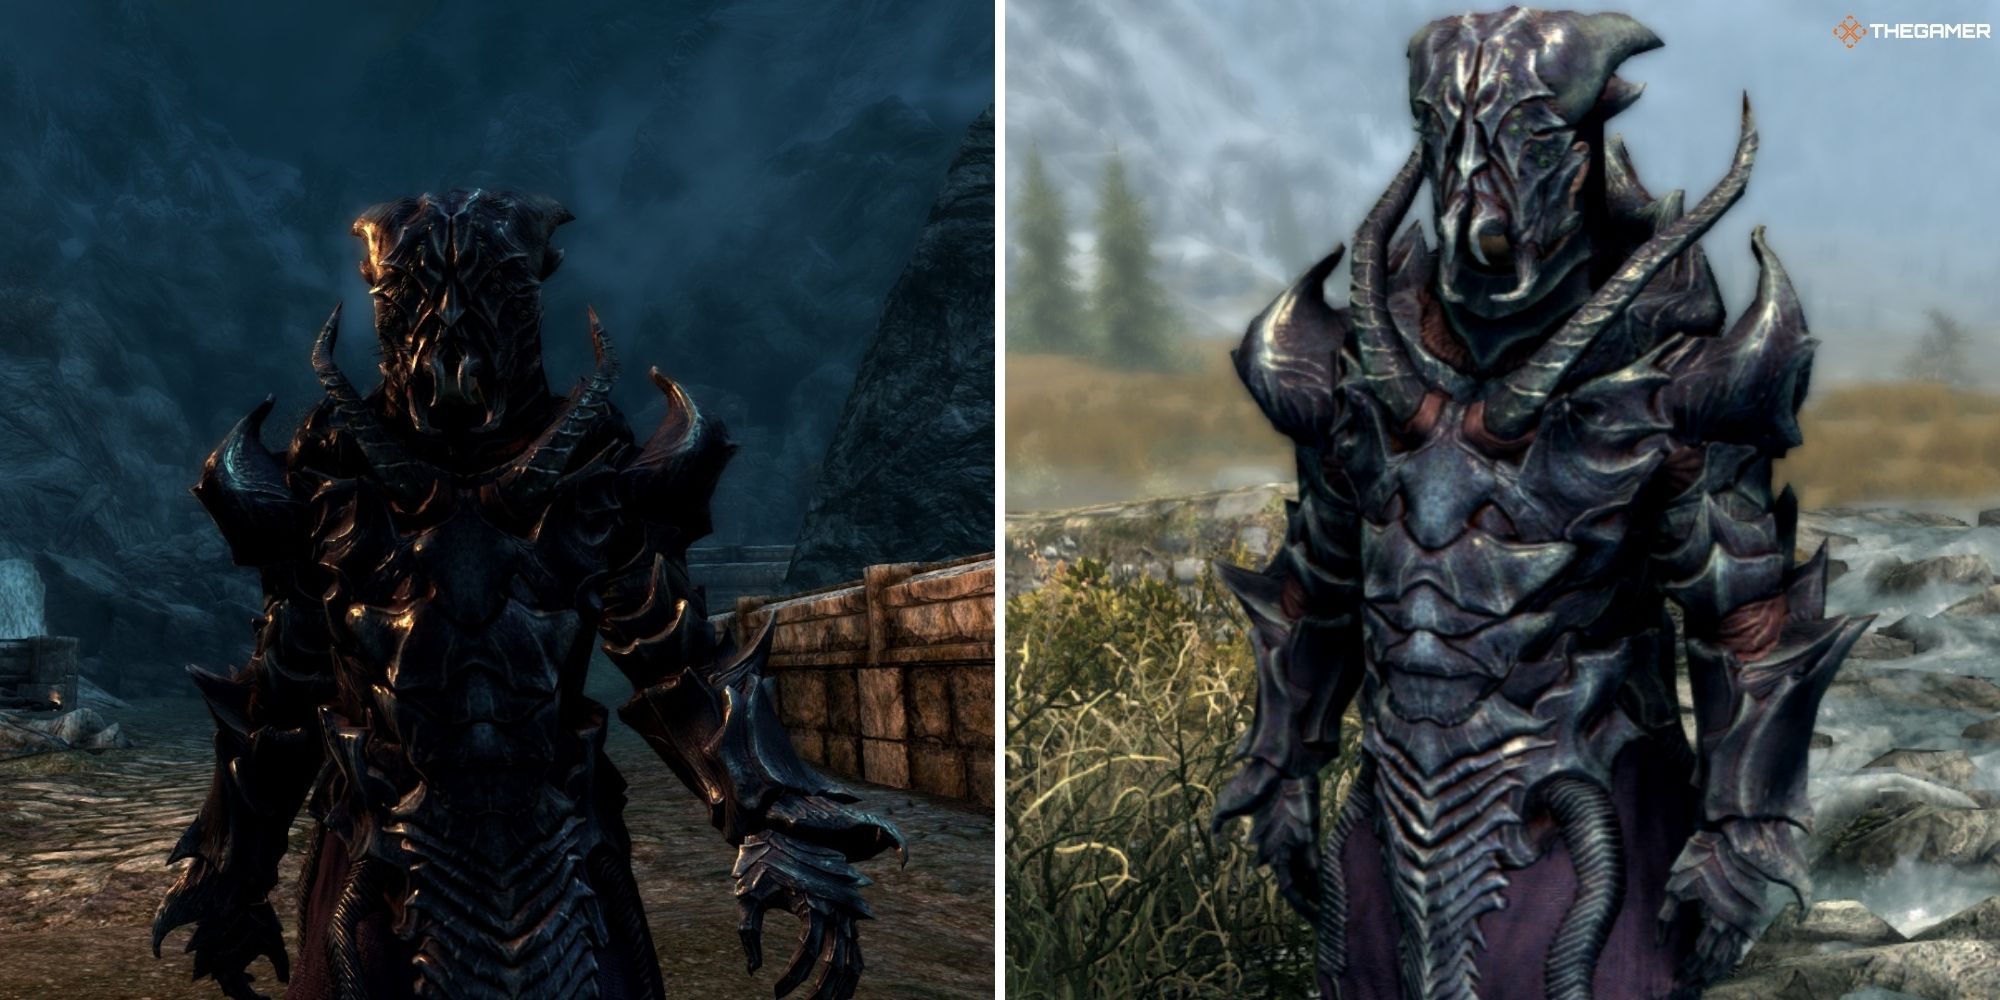 Skyrim - Falmer Heavy Armor worn by the player, split image